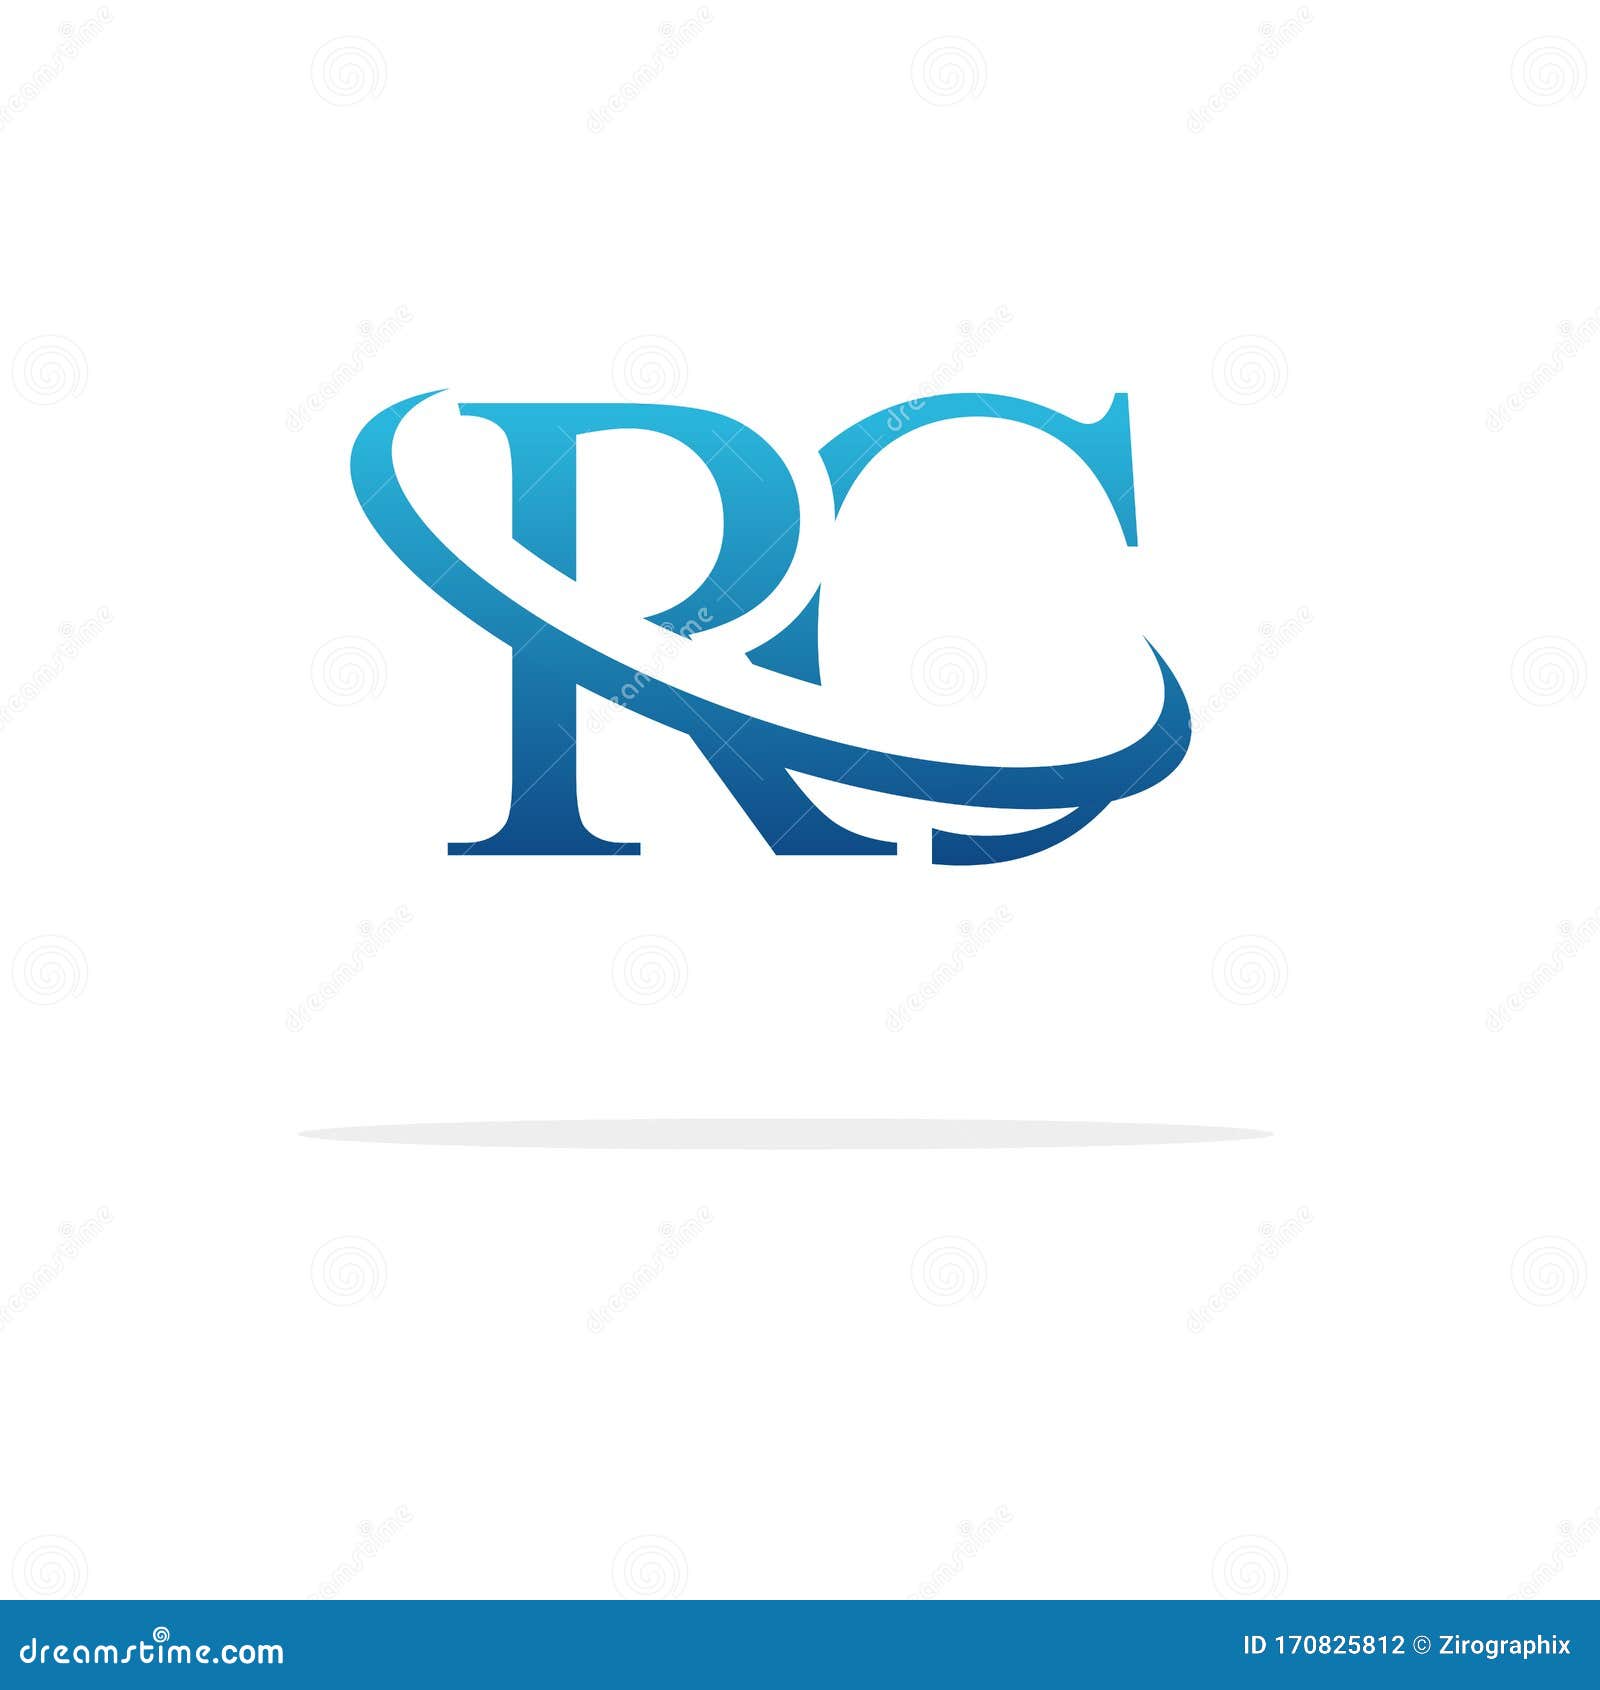 Rc Logo Stock Illustrations 1 231 Rc Logo Stock Illustrations Vectors Clipart Dreamstime